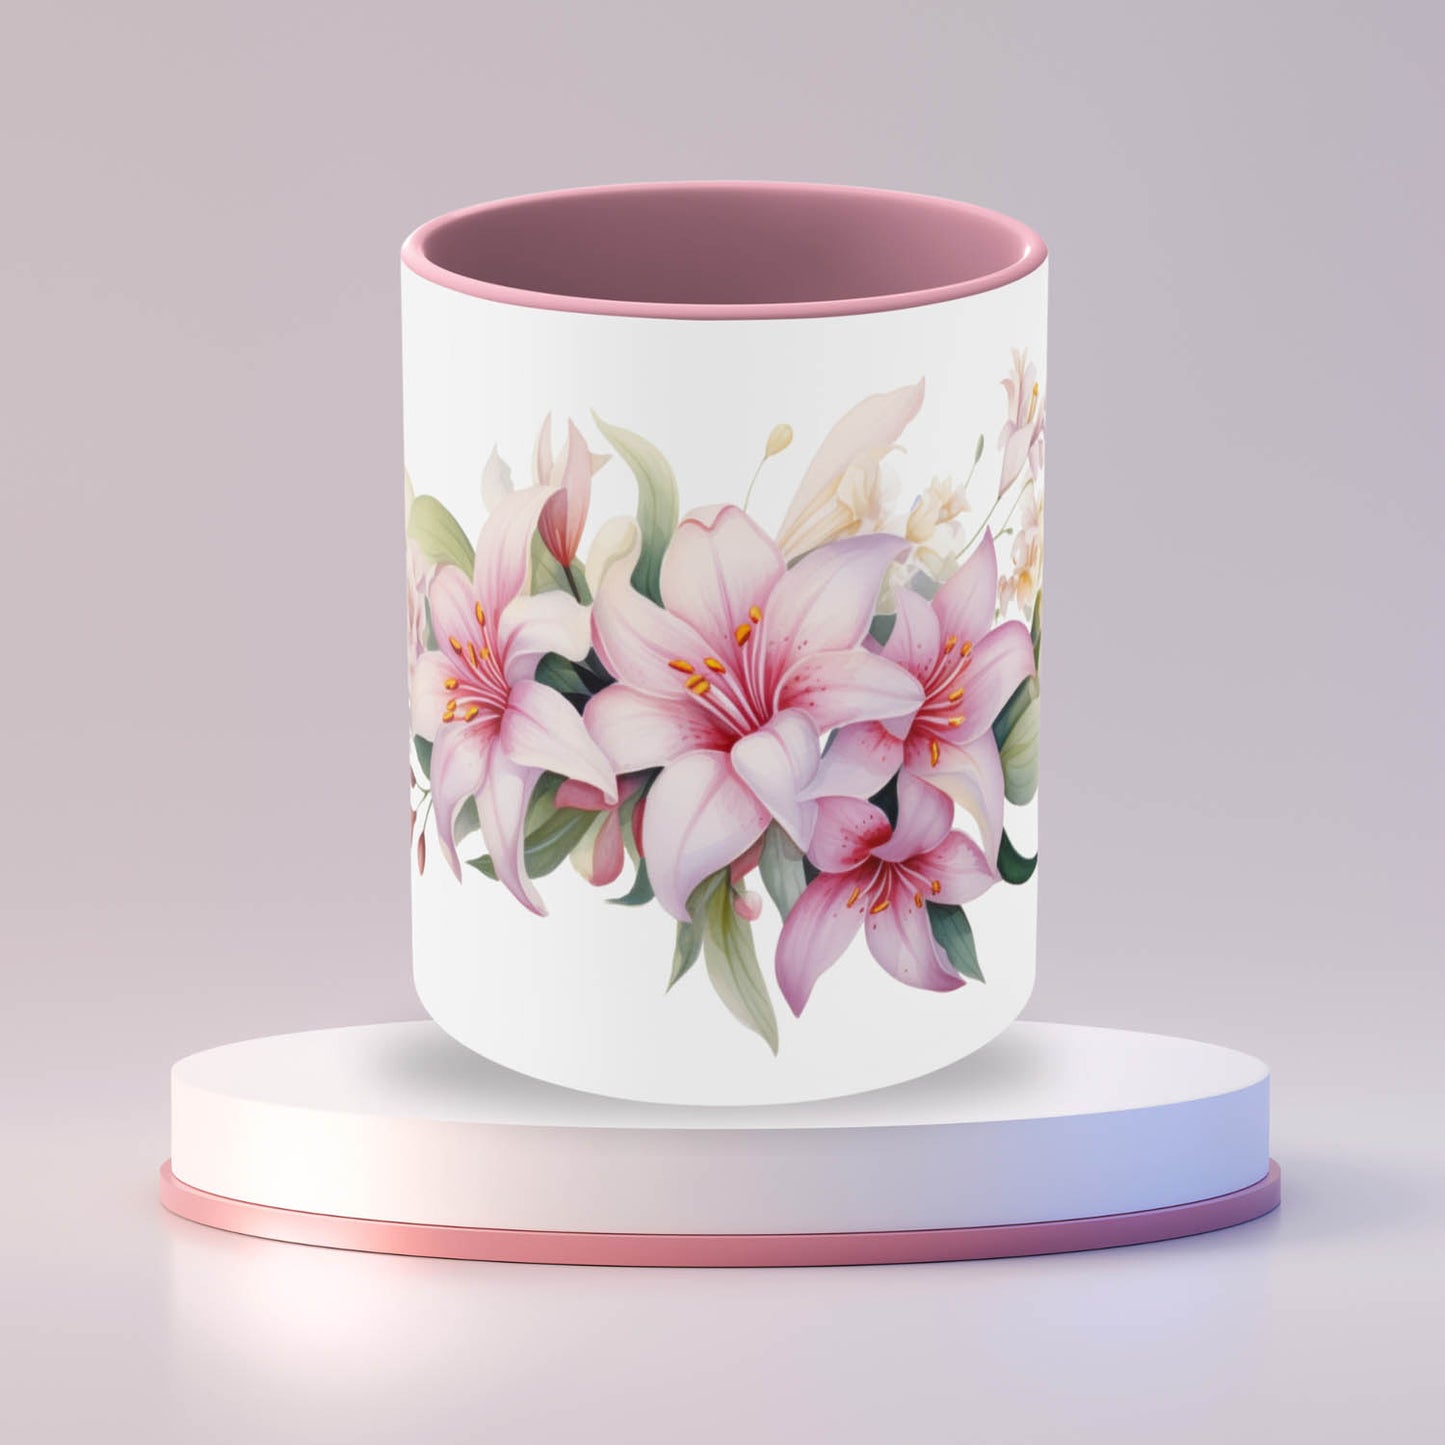 Charming Floral Mug